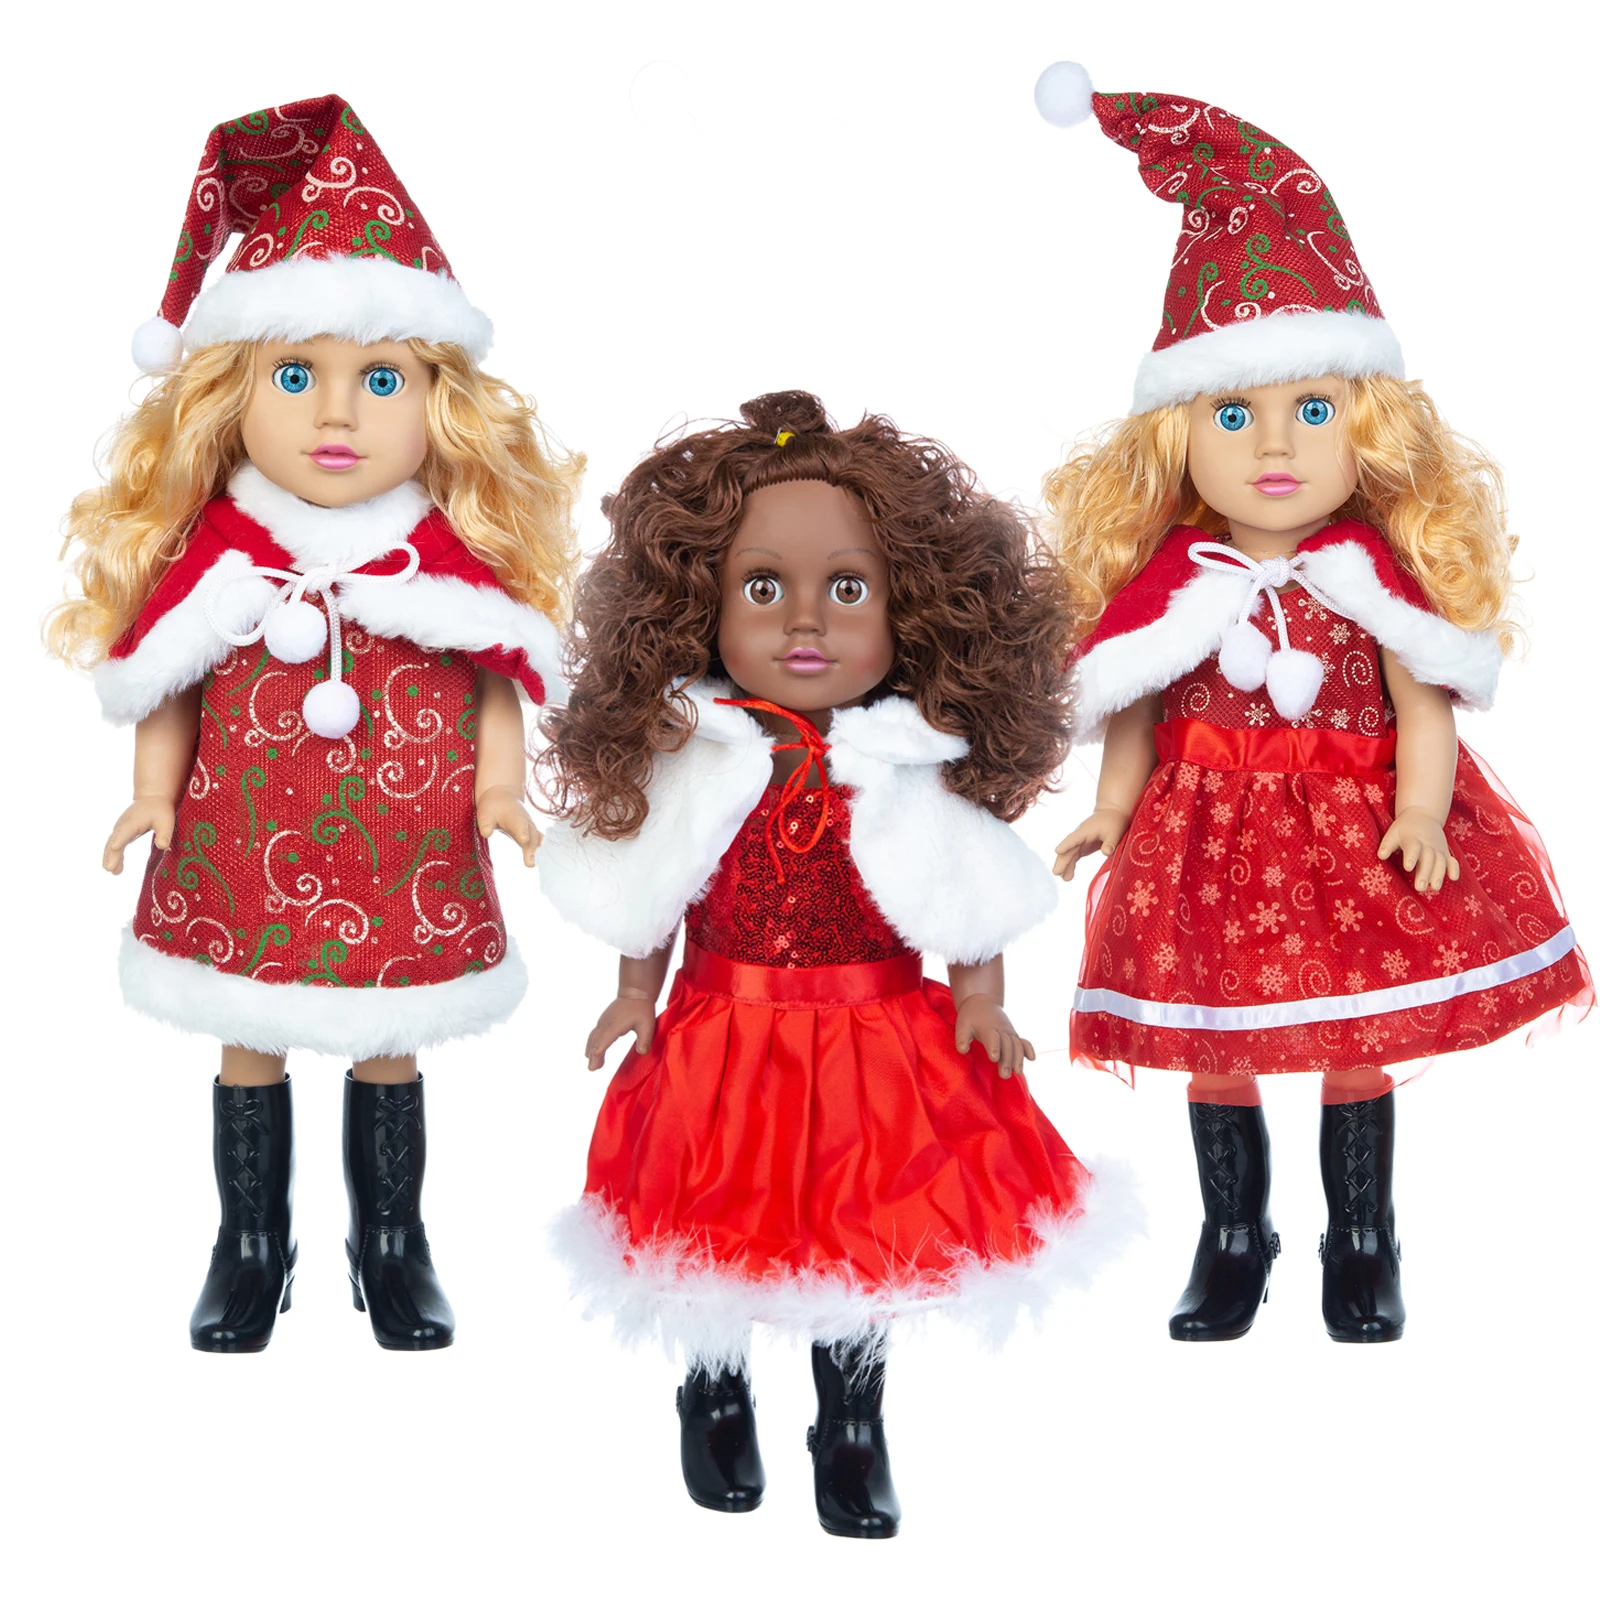 2020 New 19Inch Christmas Girl Doll Children Girls Toy Mini Cute Explosive hairstyle Doll Children Girls кварцевые часы aliexpress explosive dz 2020 доступны в большом количестве для мужского повседневного стиля 7314 ремень